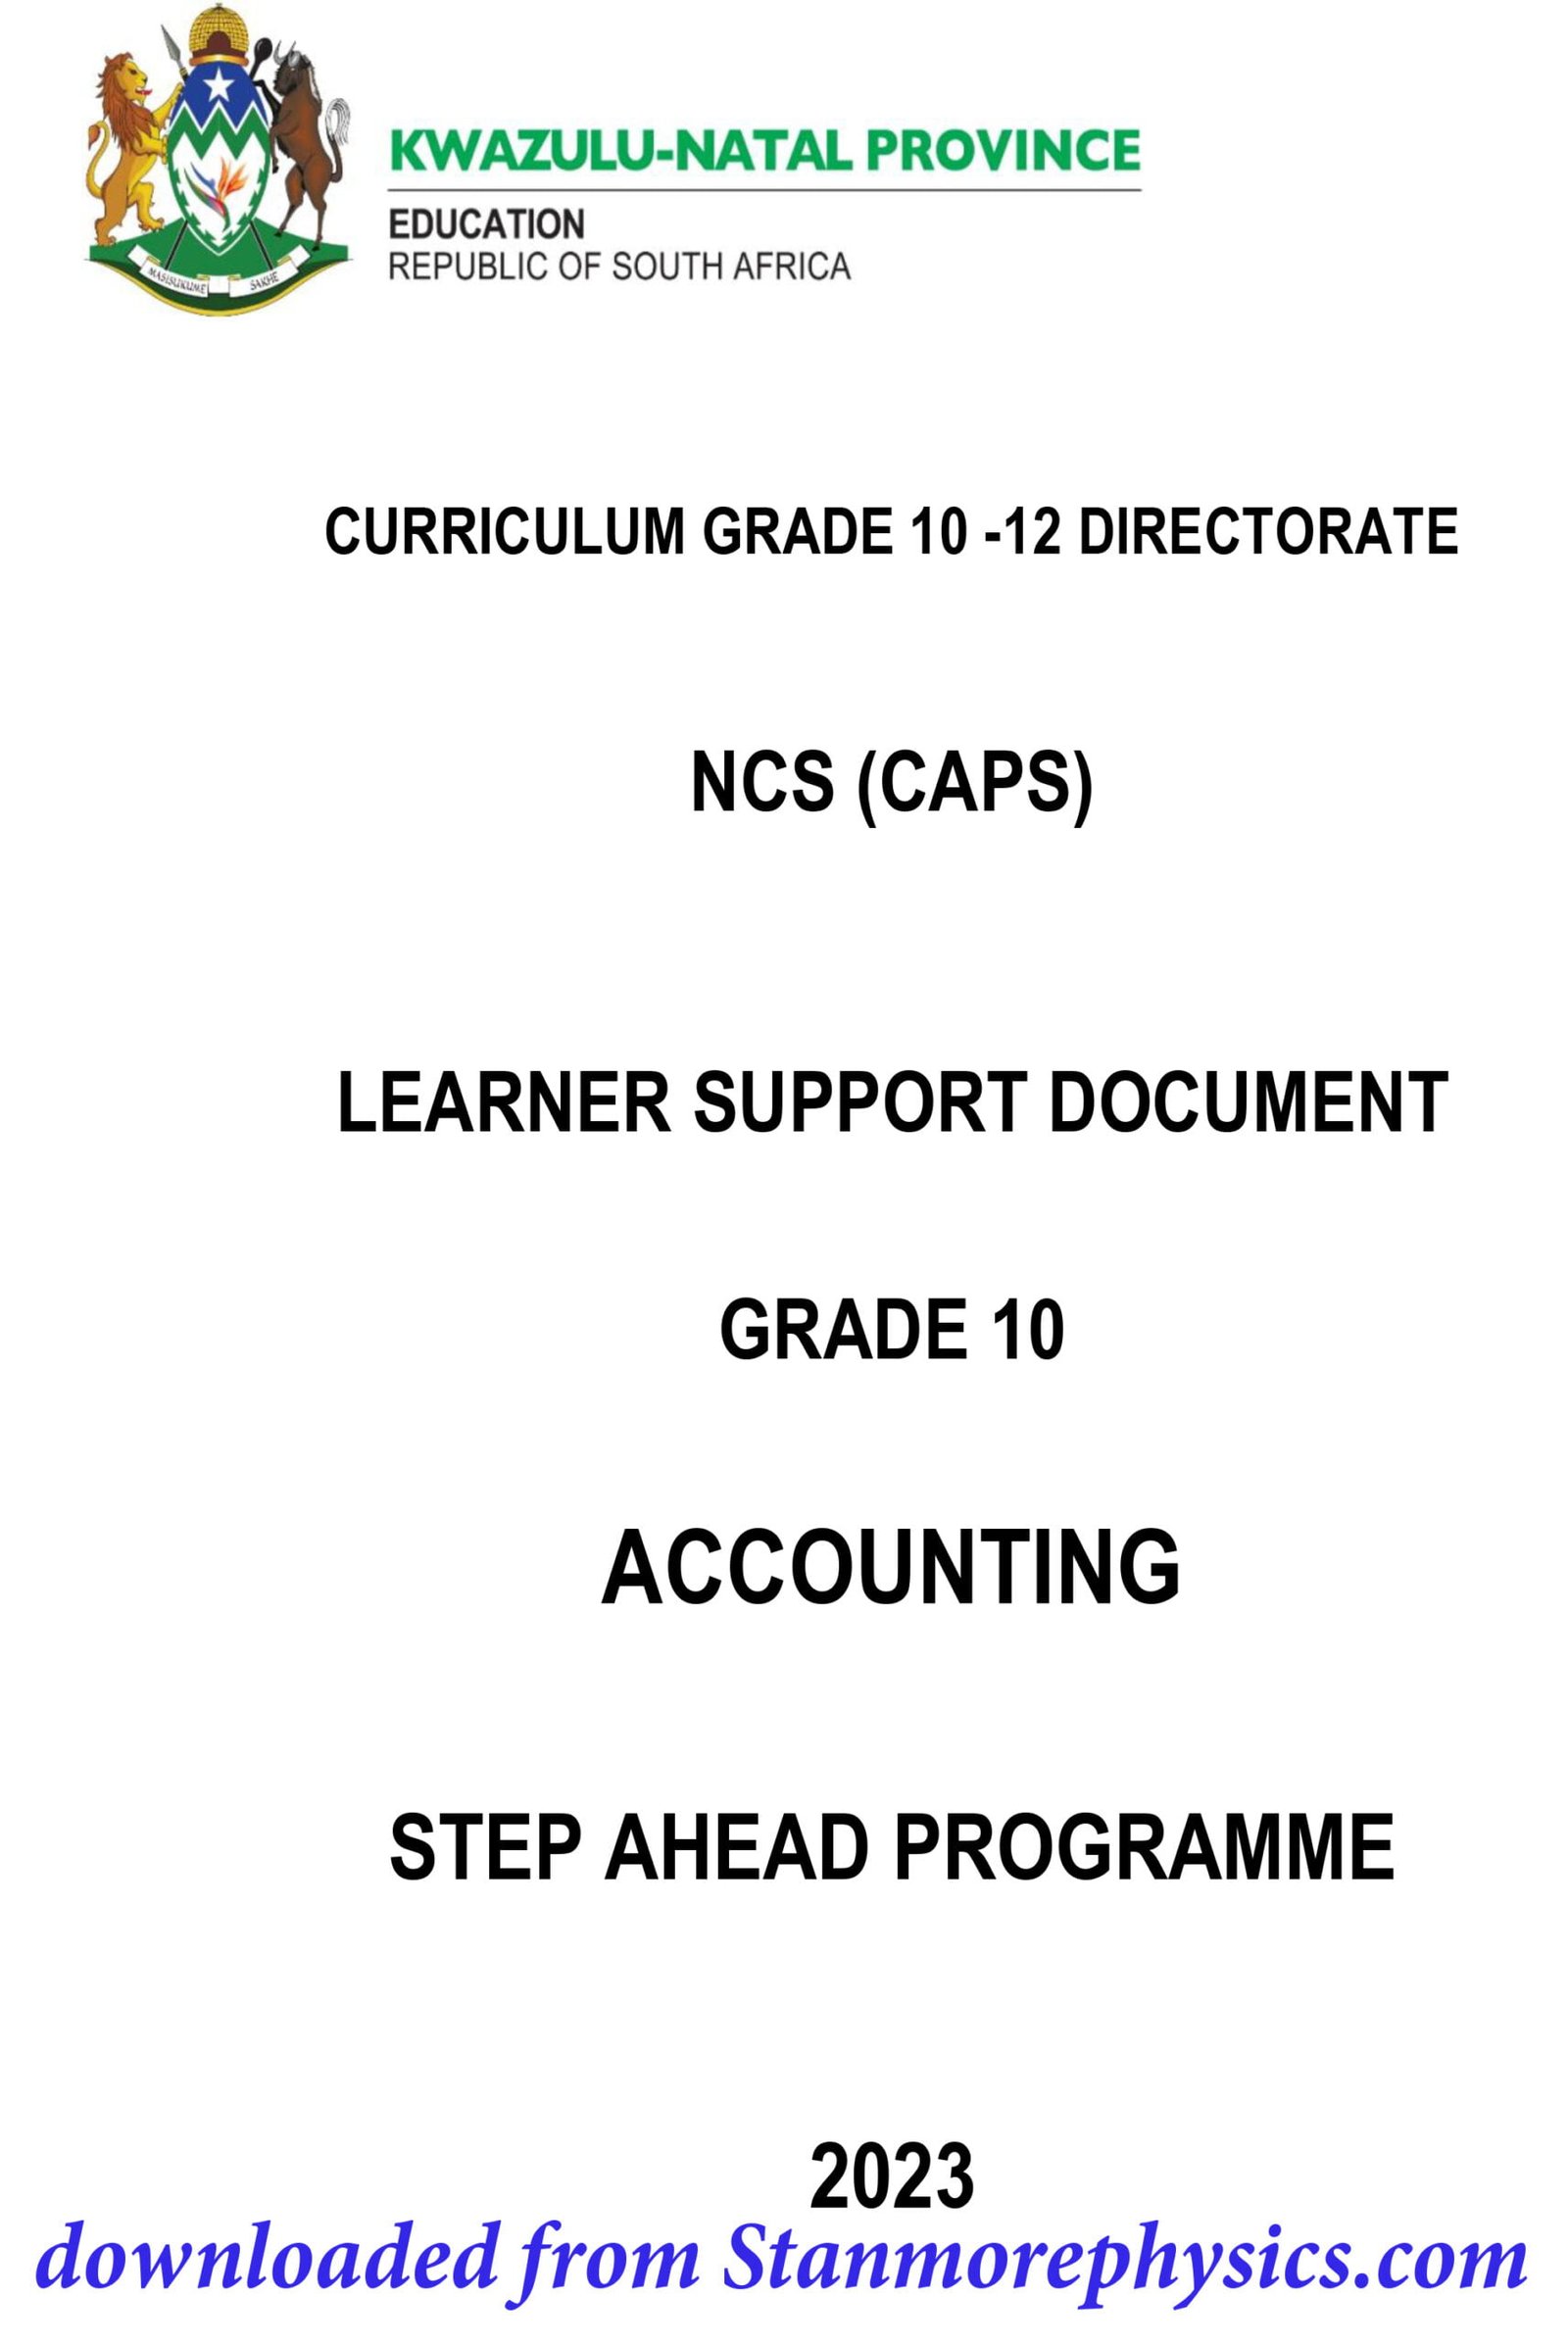 grade 10 accounting term 3 case study memo 2021